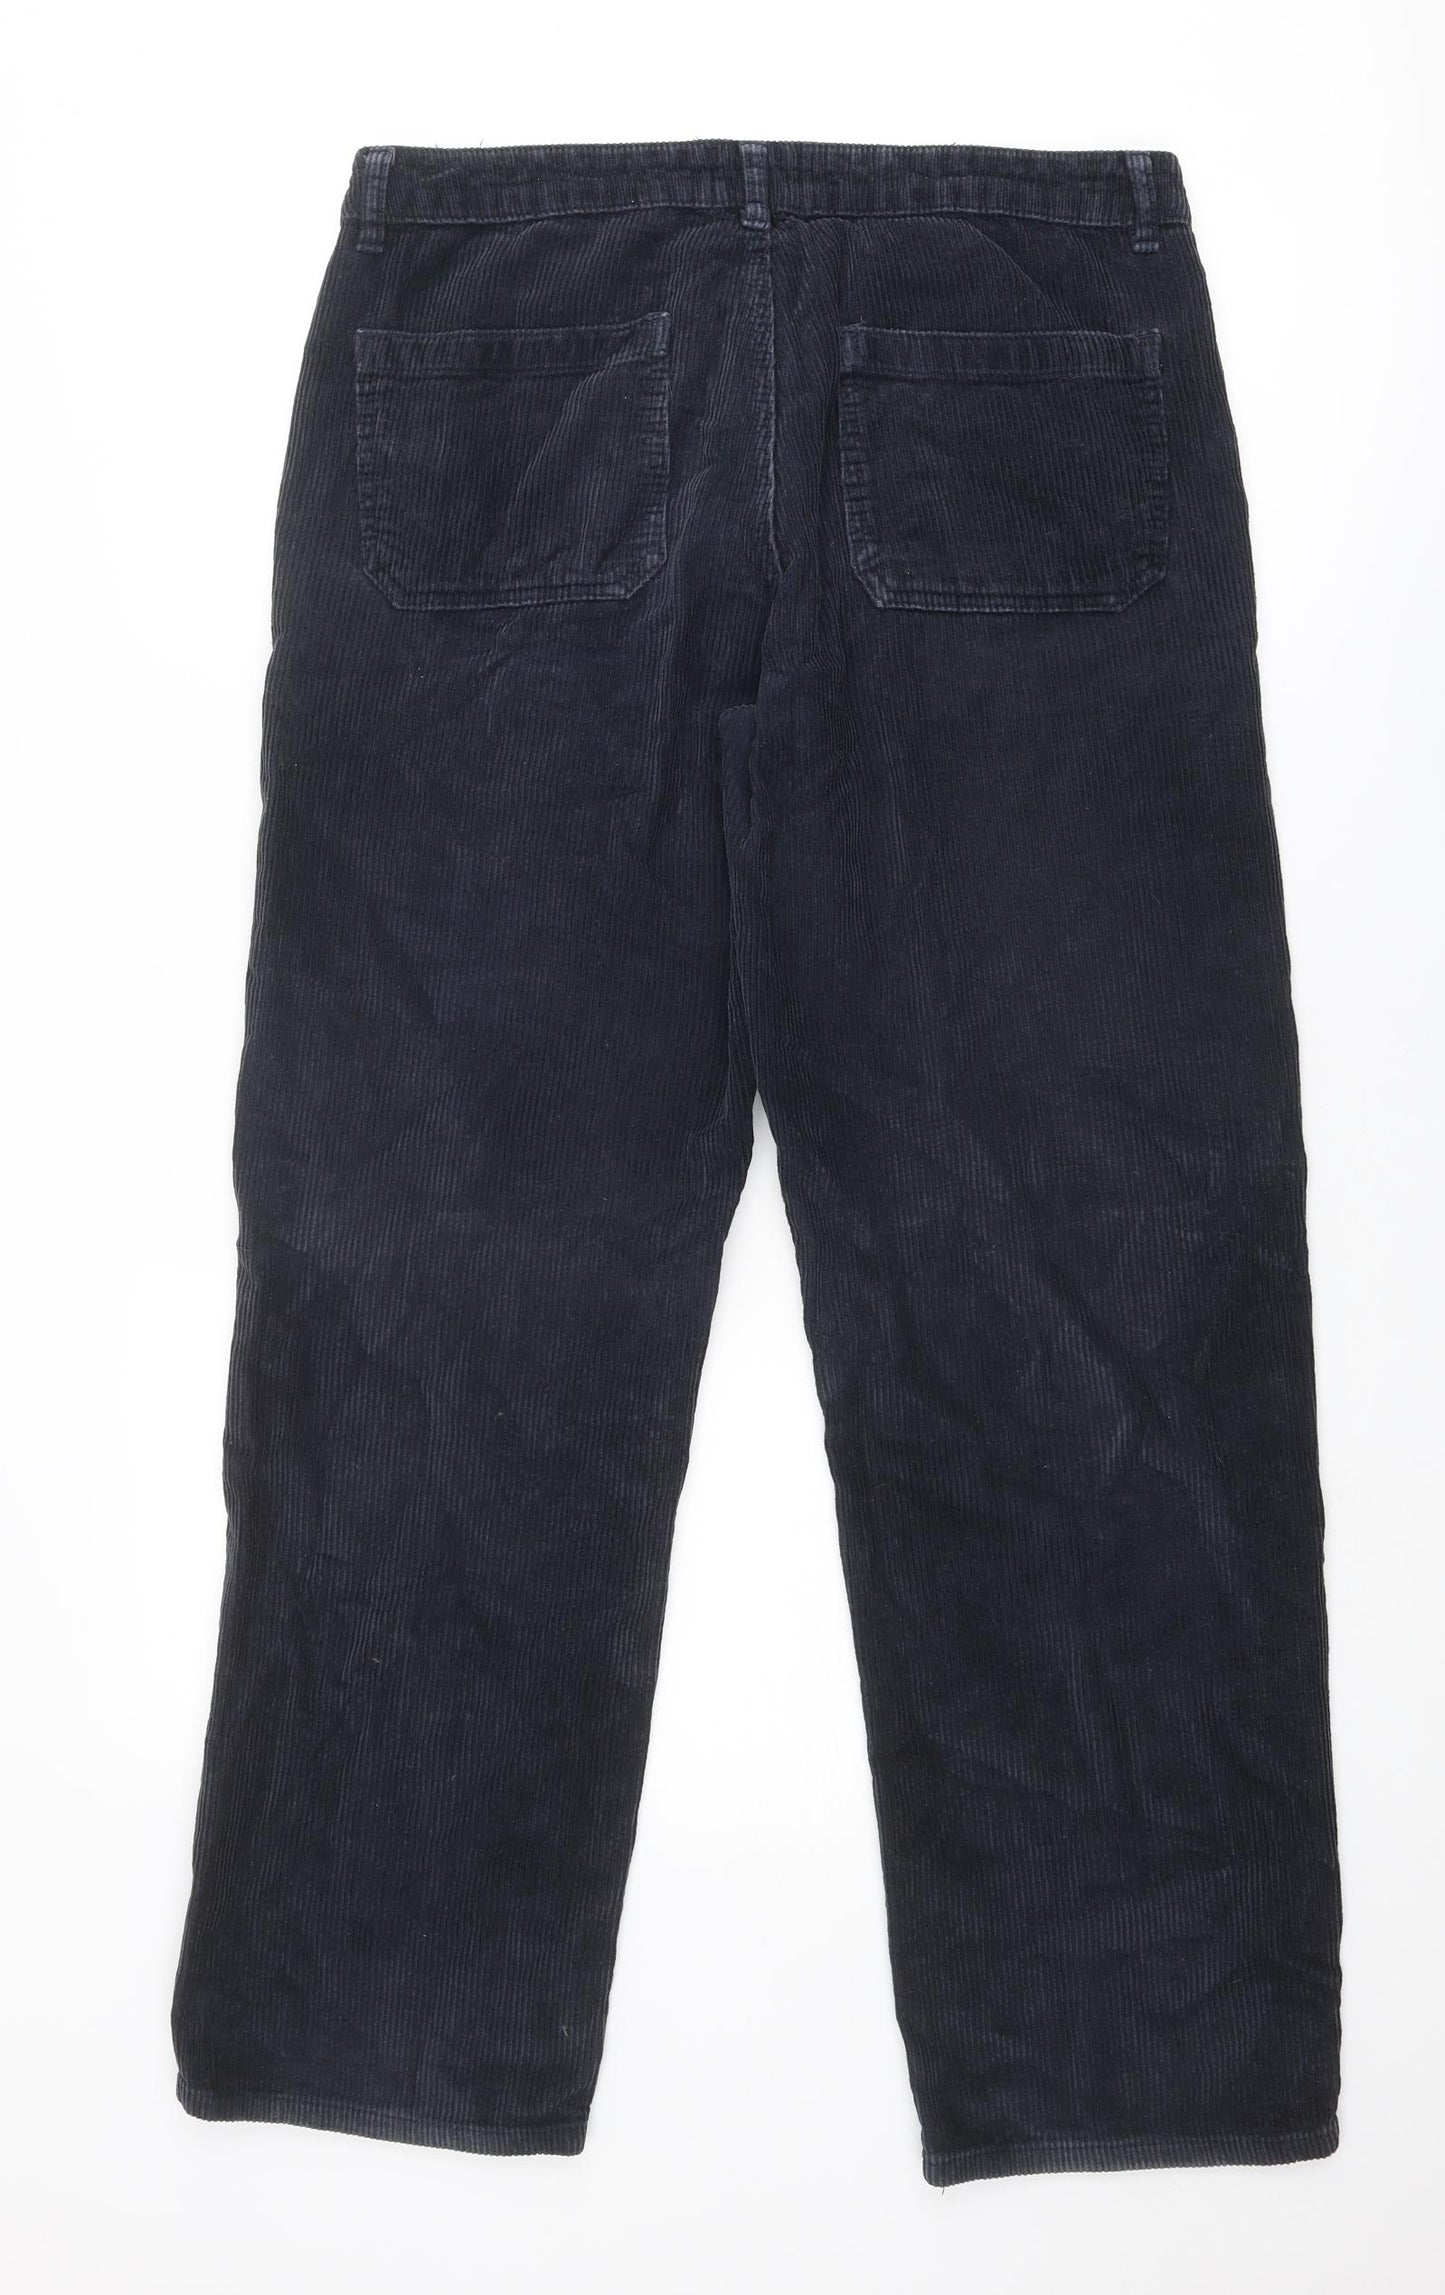 John Lewis Mens Blue Cotton Trousers Size 34 in Regular Button